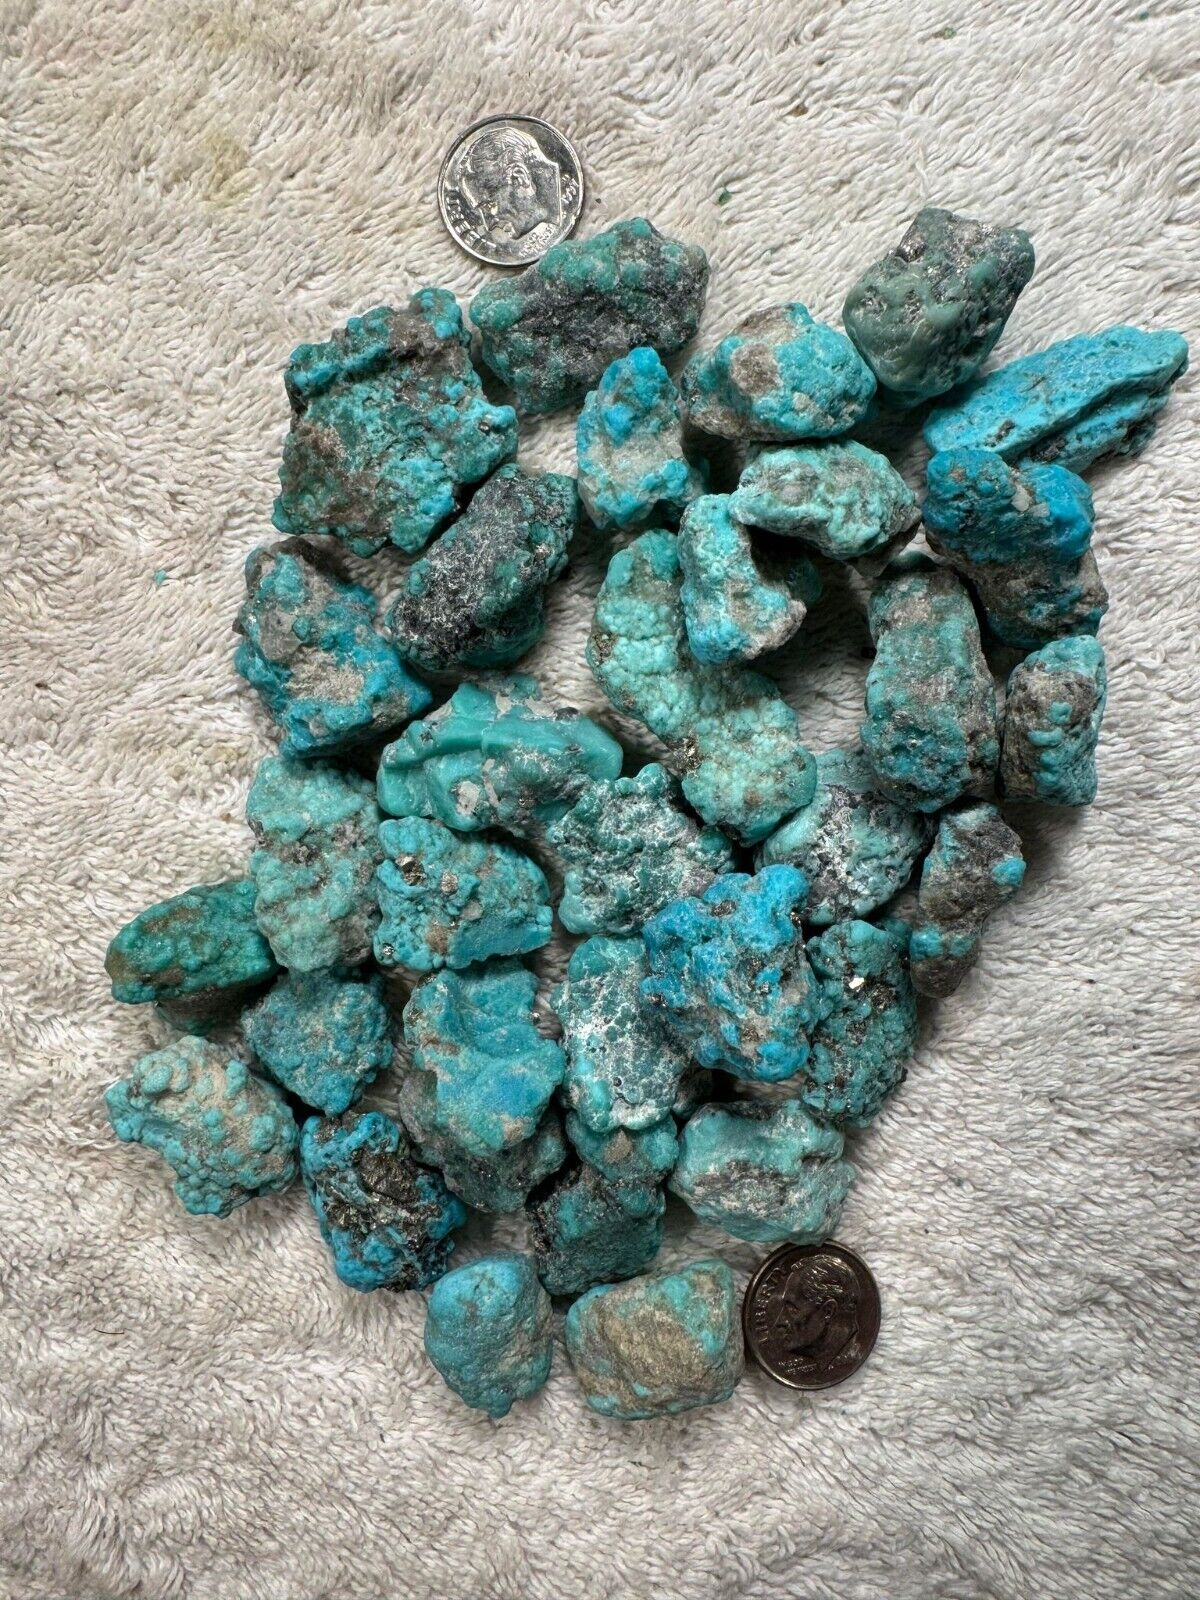 Turquoise, Campitos, Rough, 1/2 pound (+)